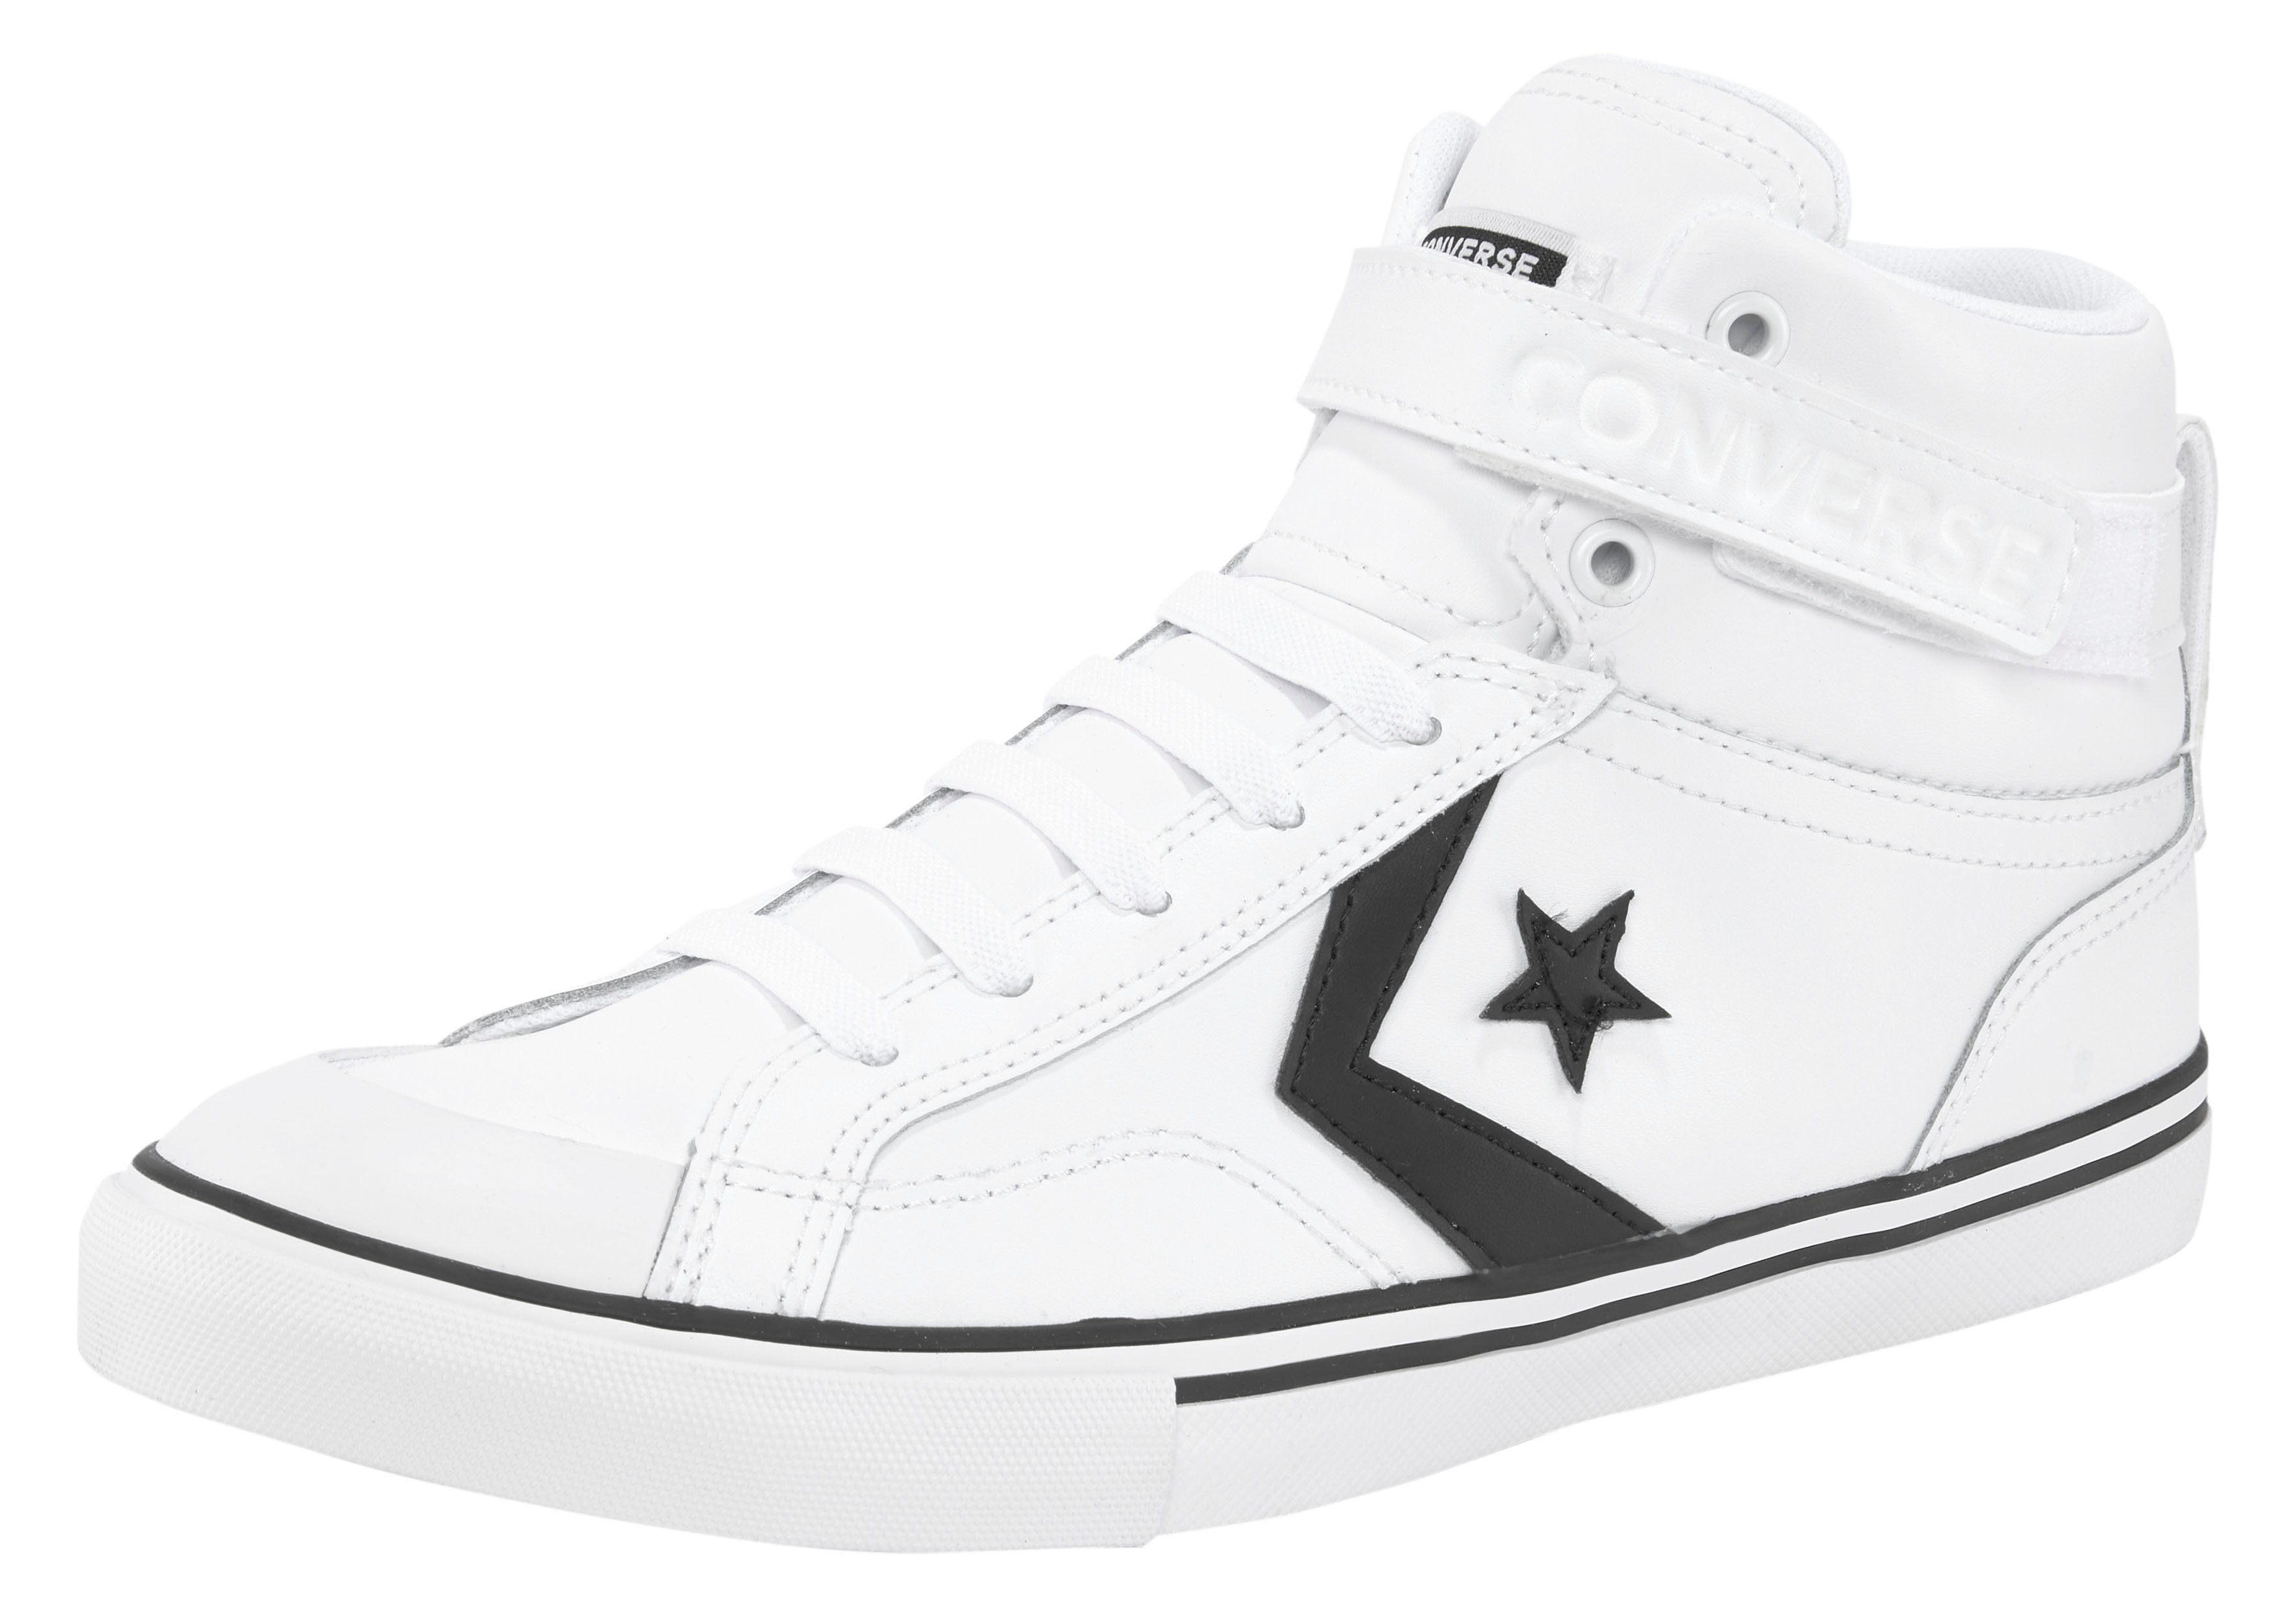 Converse PRO LEATHER weiß-schwarz STRAP Sneaker BLAZE